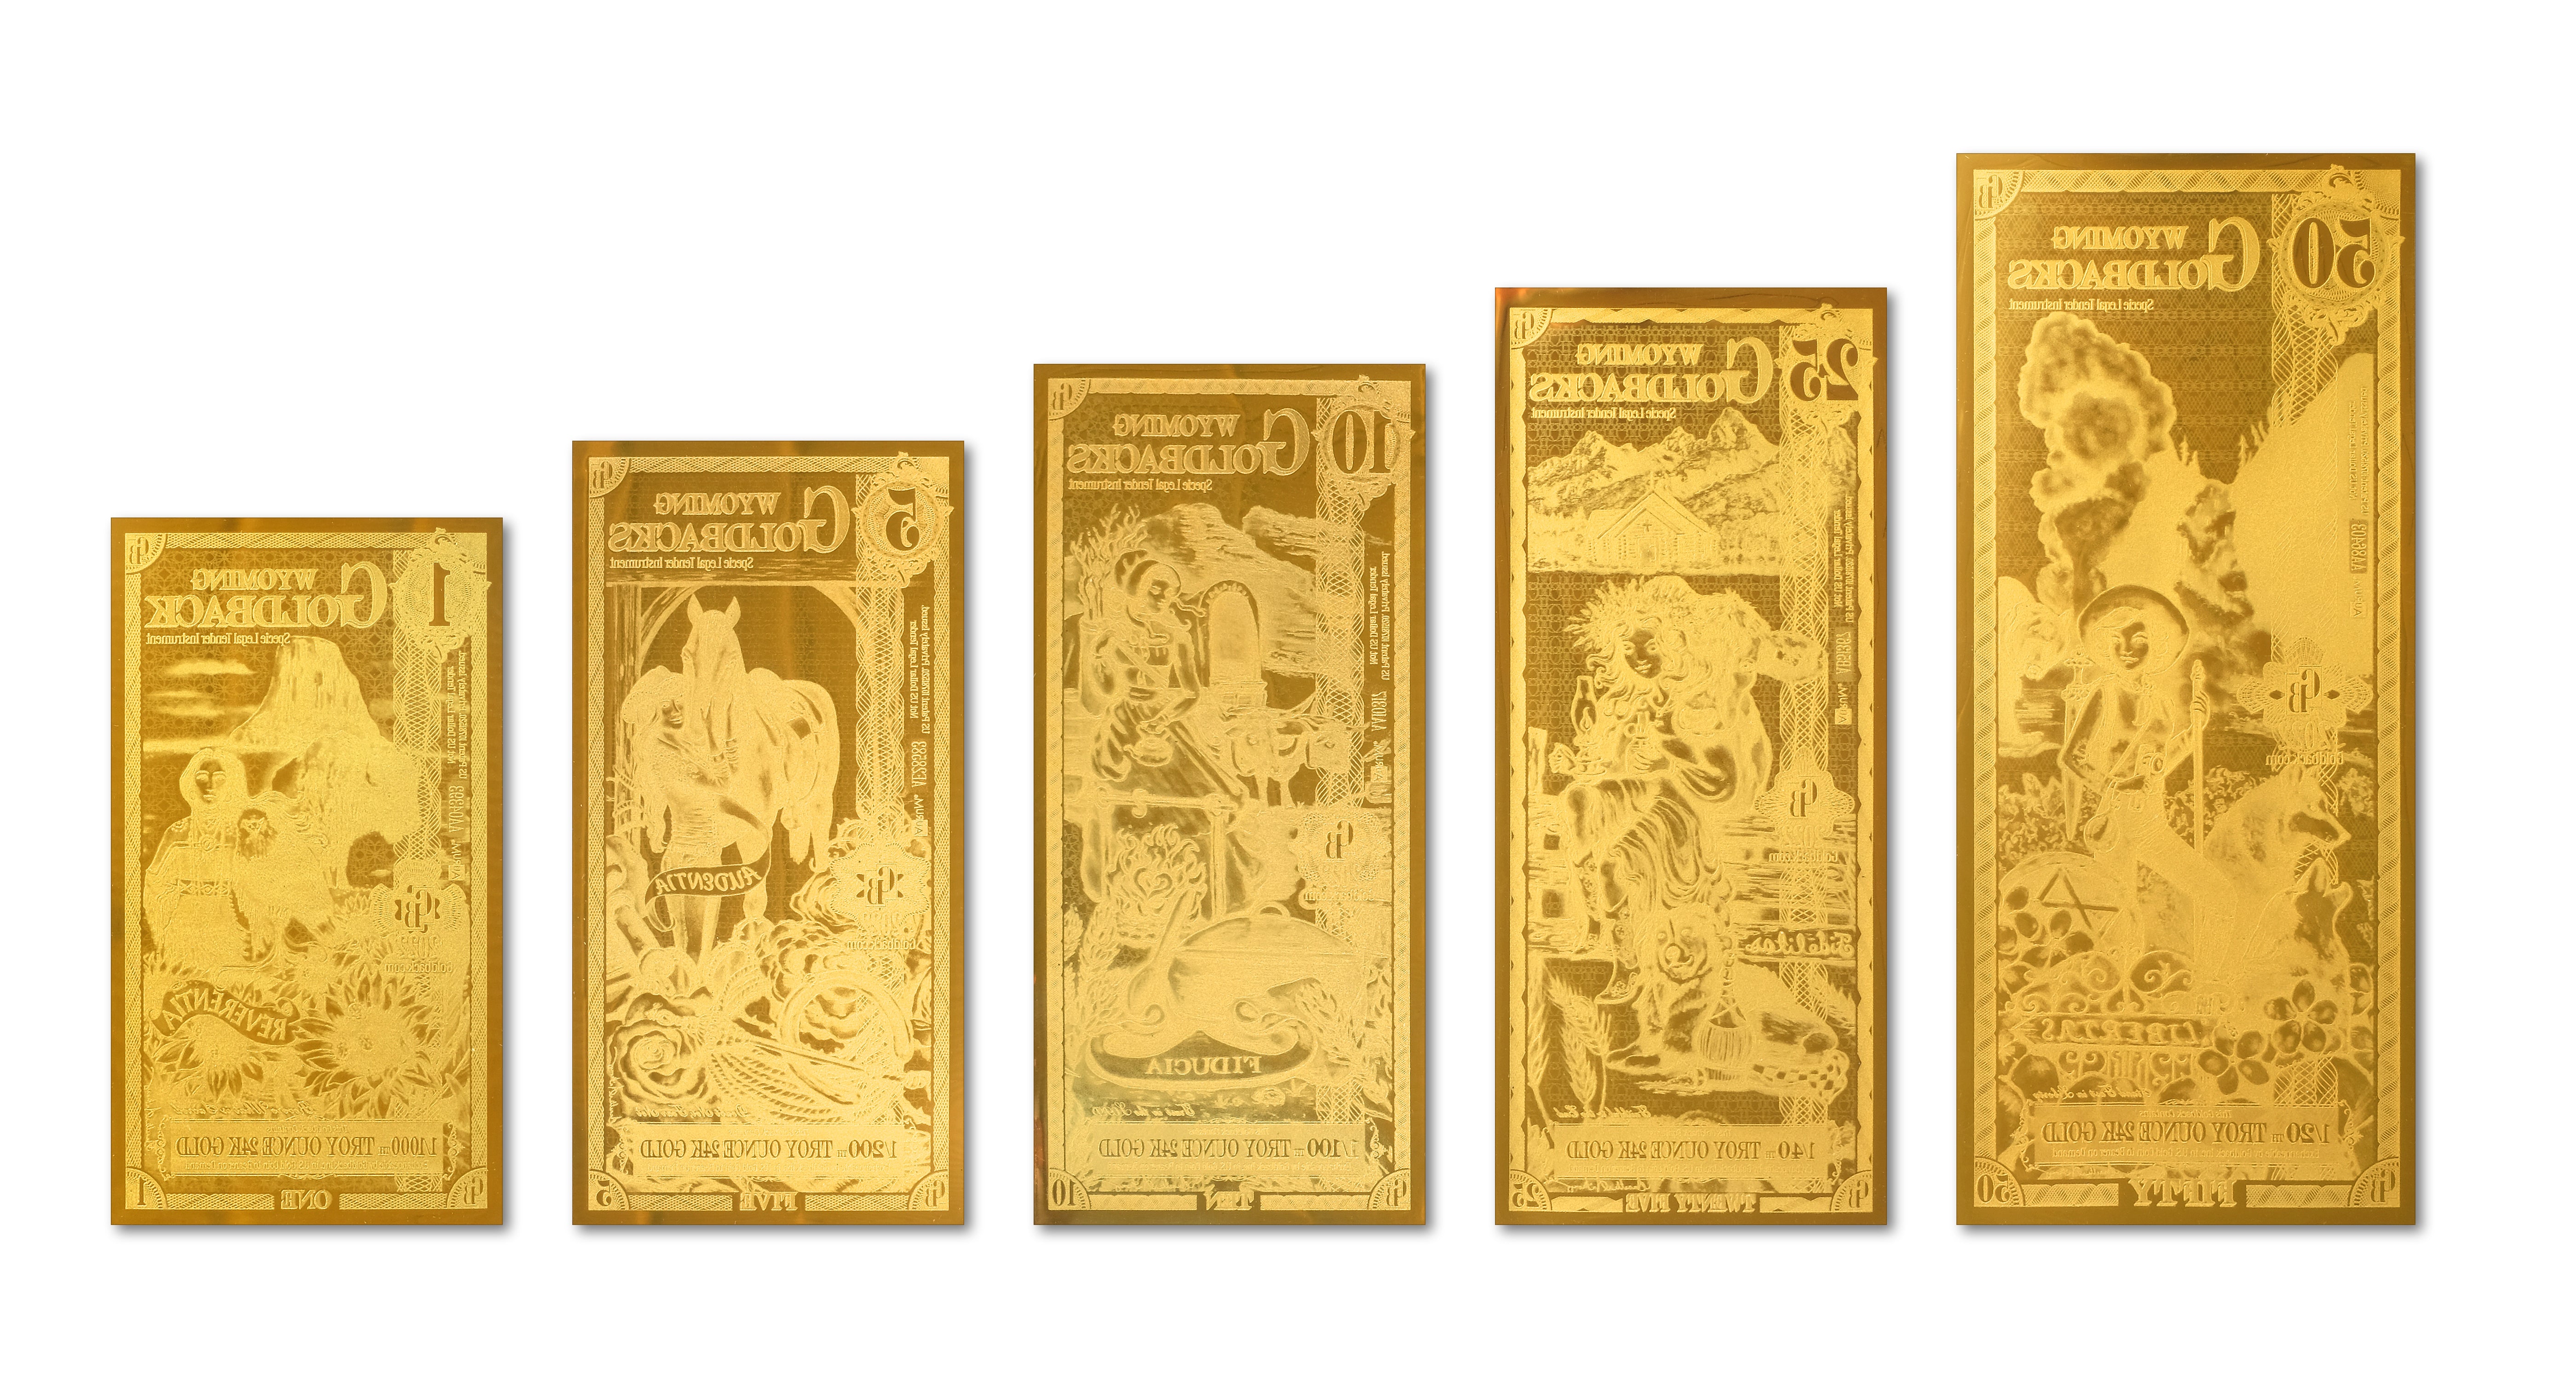 WYOMING GOLDBACK FULL SET 1,5,10,25,50 AURUM 24KT GOLD FOIL NOTE BU .999 FINE GOLD